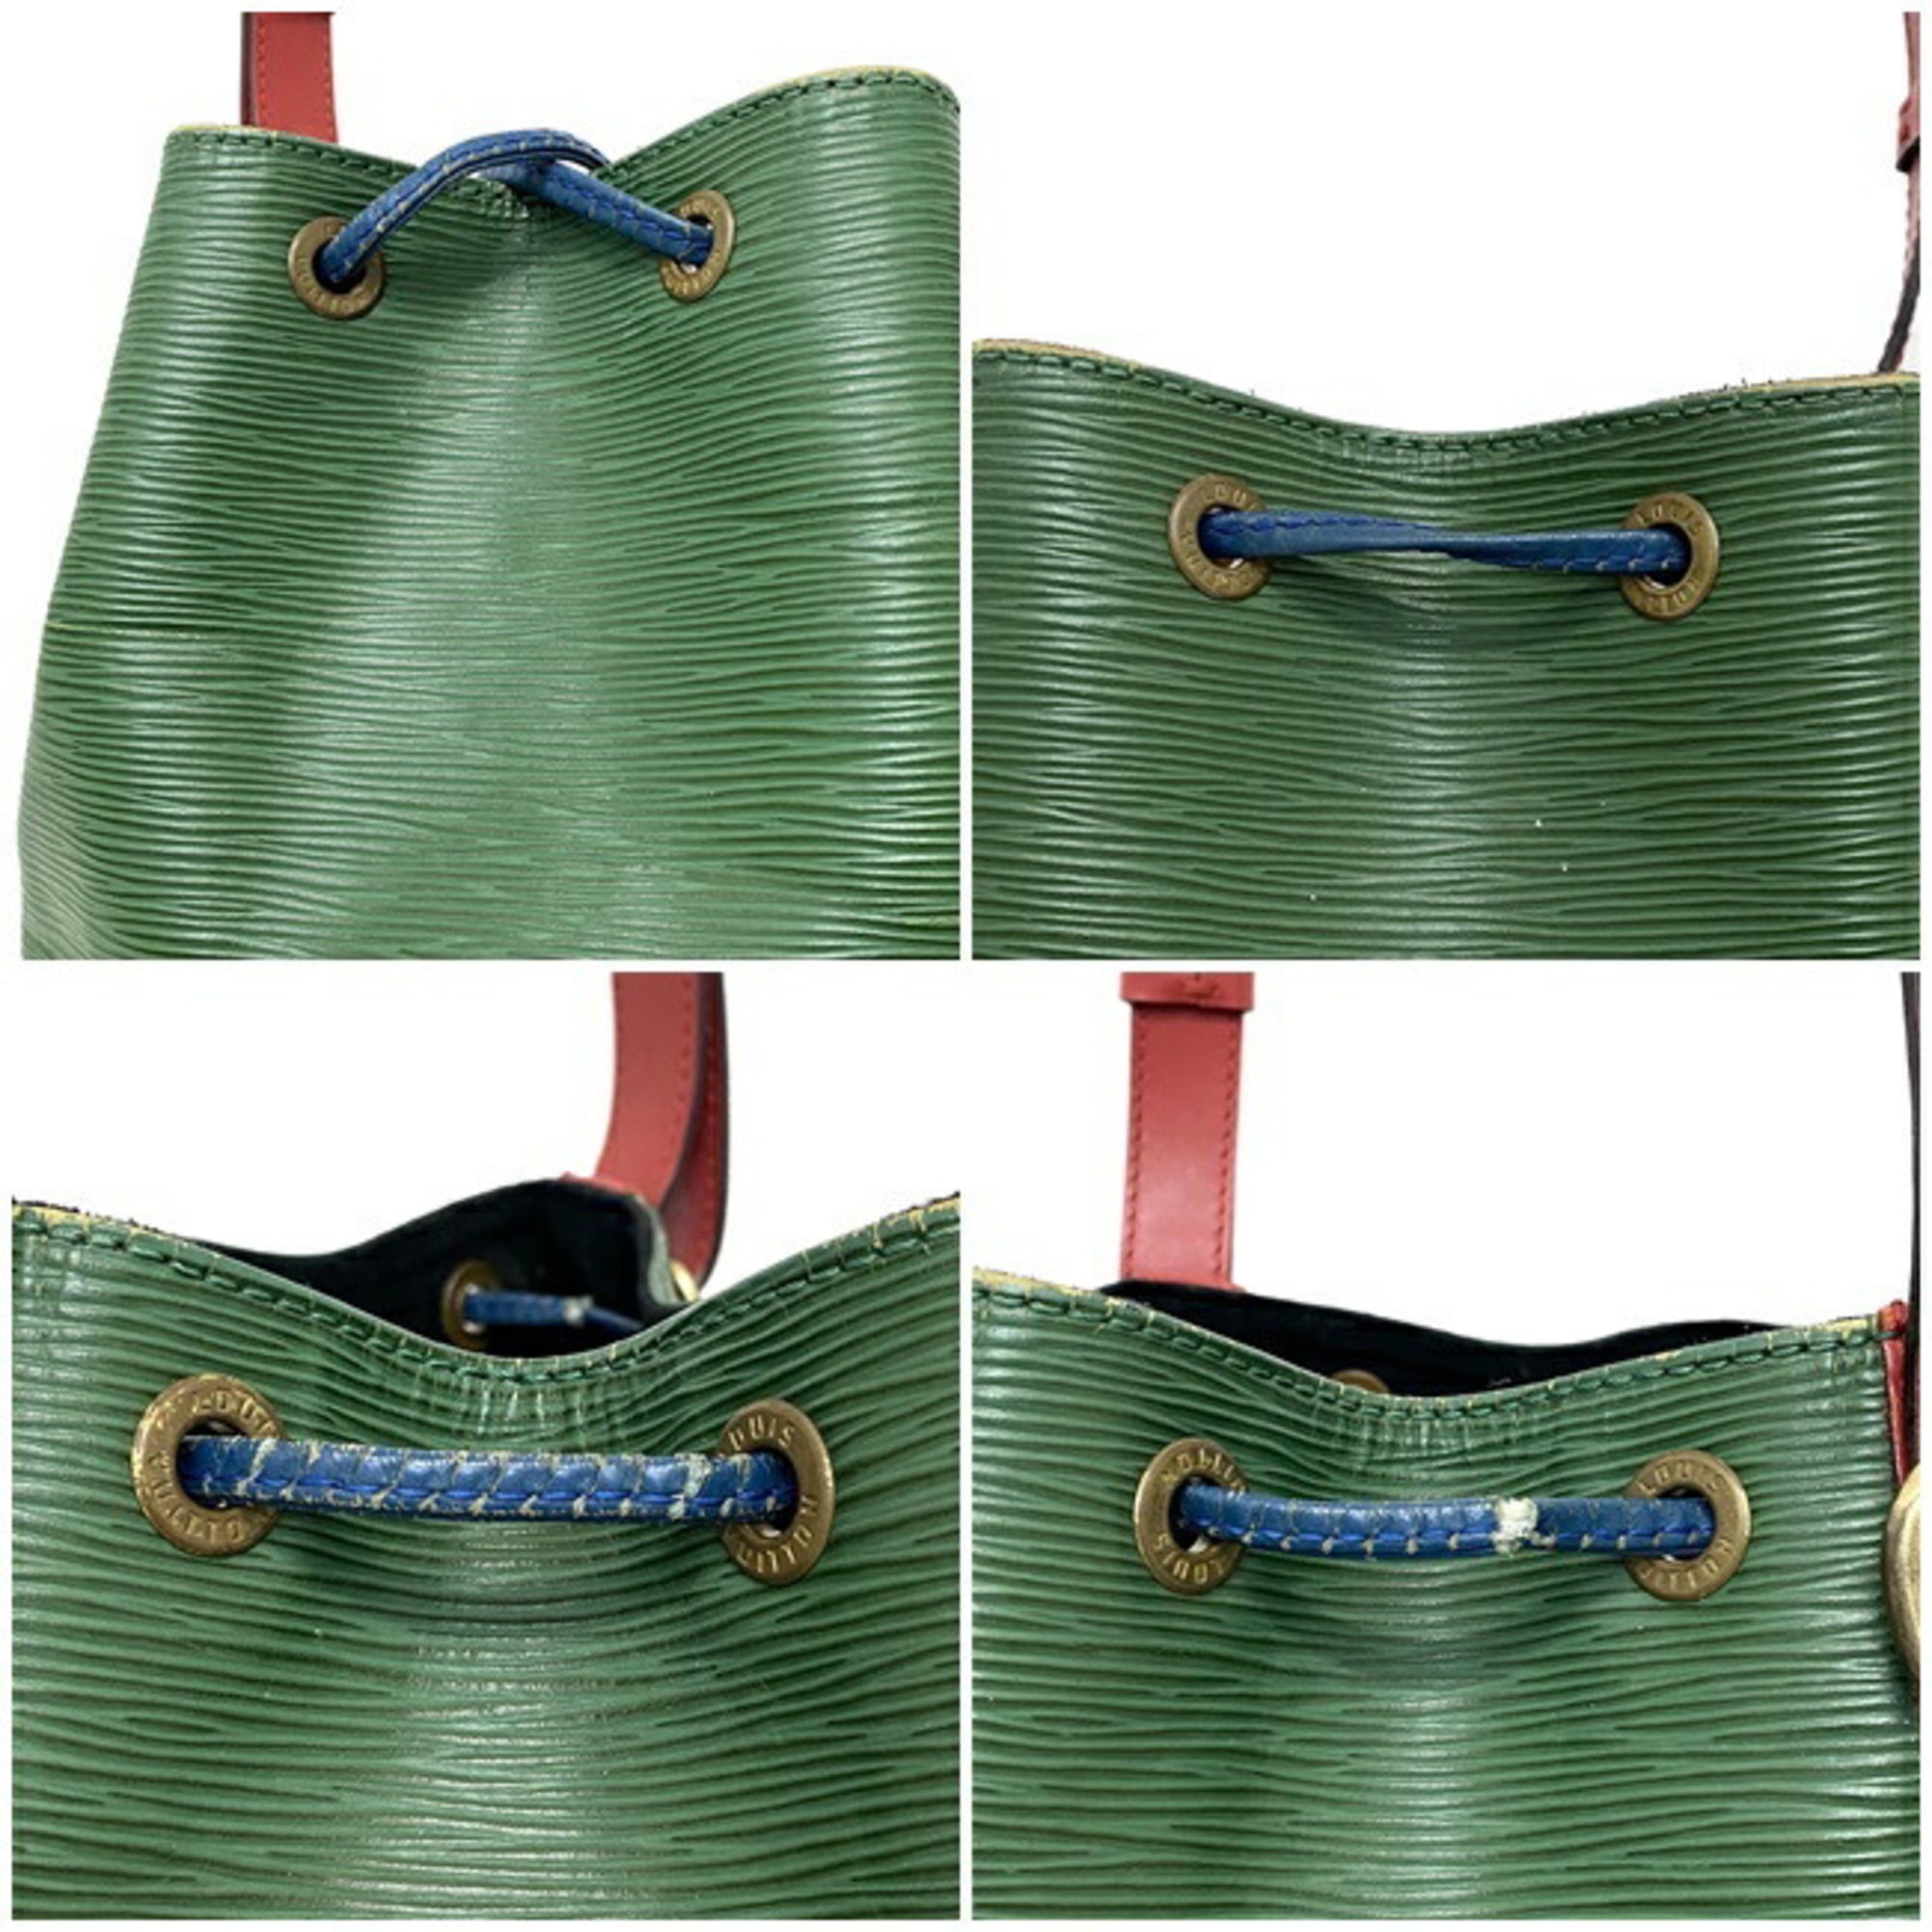 Bag Lust and Save & Splurge: The Drawstring Bag Edition - Louis Vuitton  Petit Noe v Radley Buttermere Drawstring - My Women Stuff